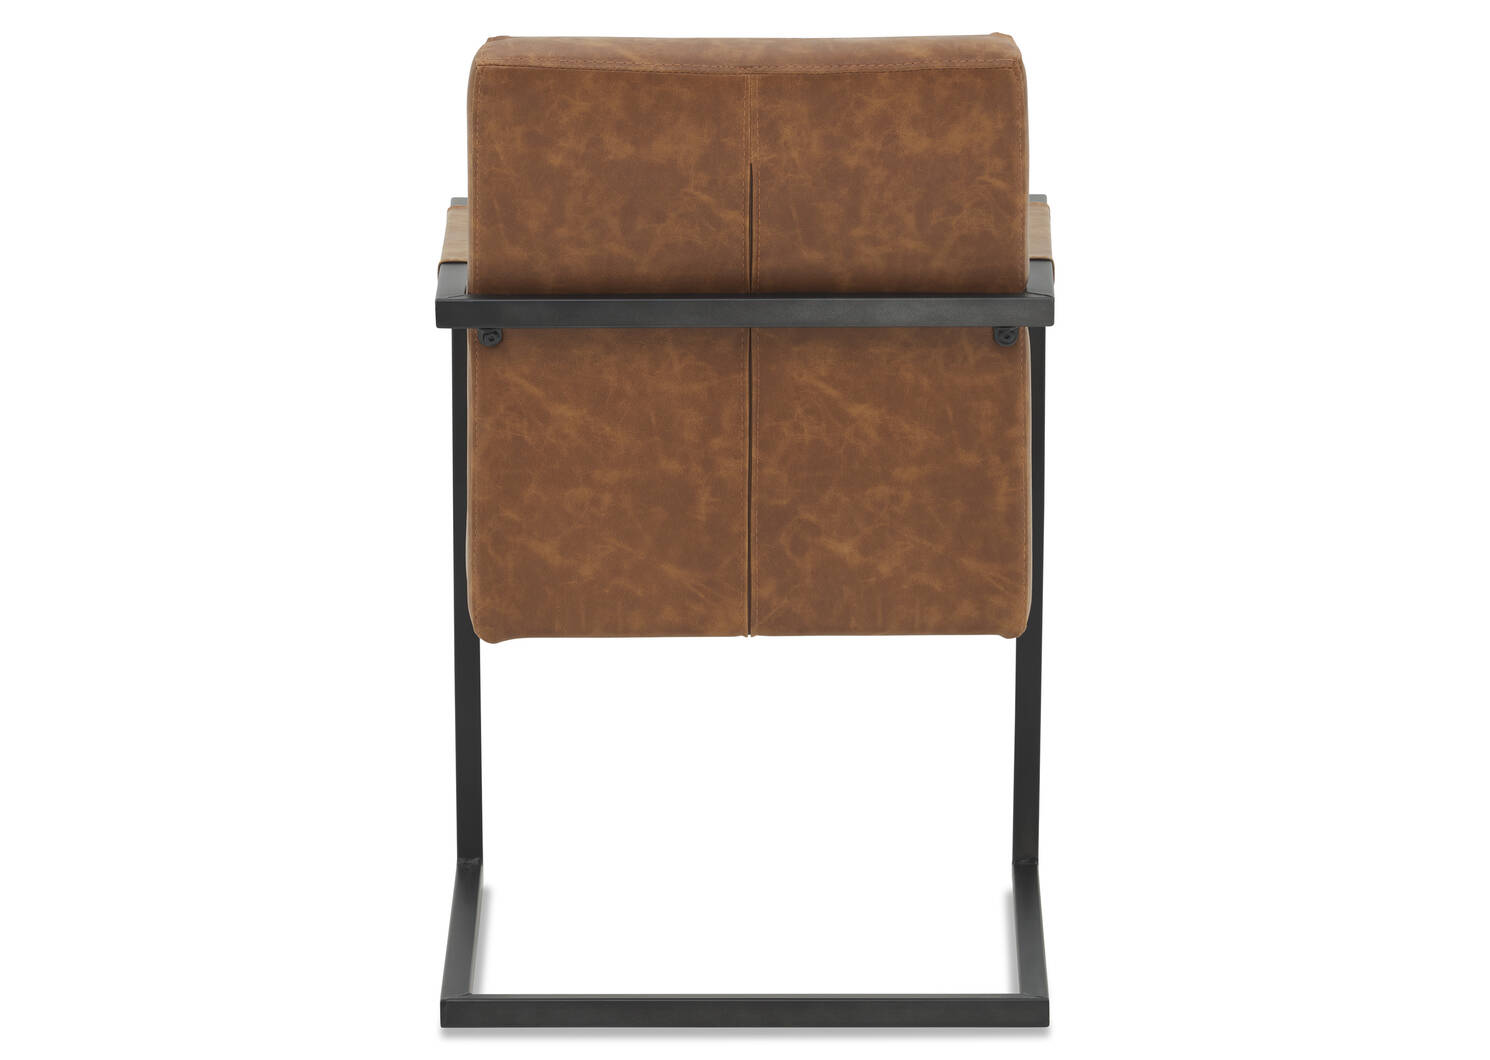 Barkley Arm Dining Chair -Scott Cognac